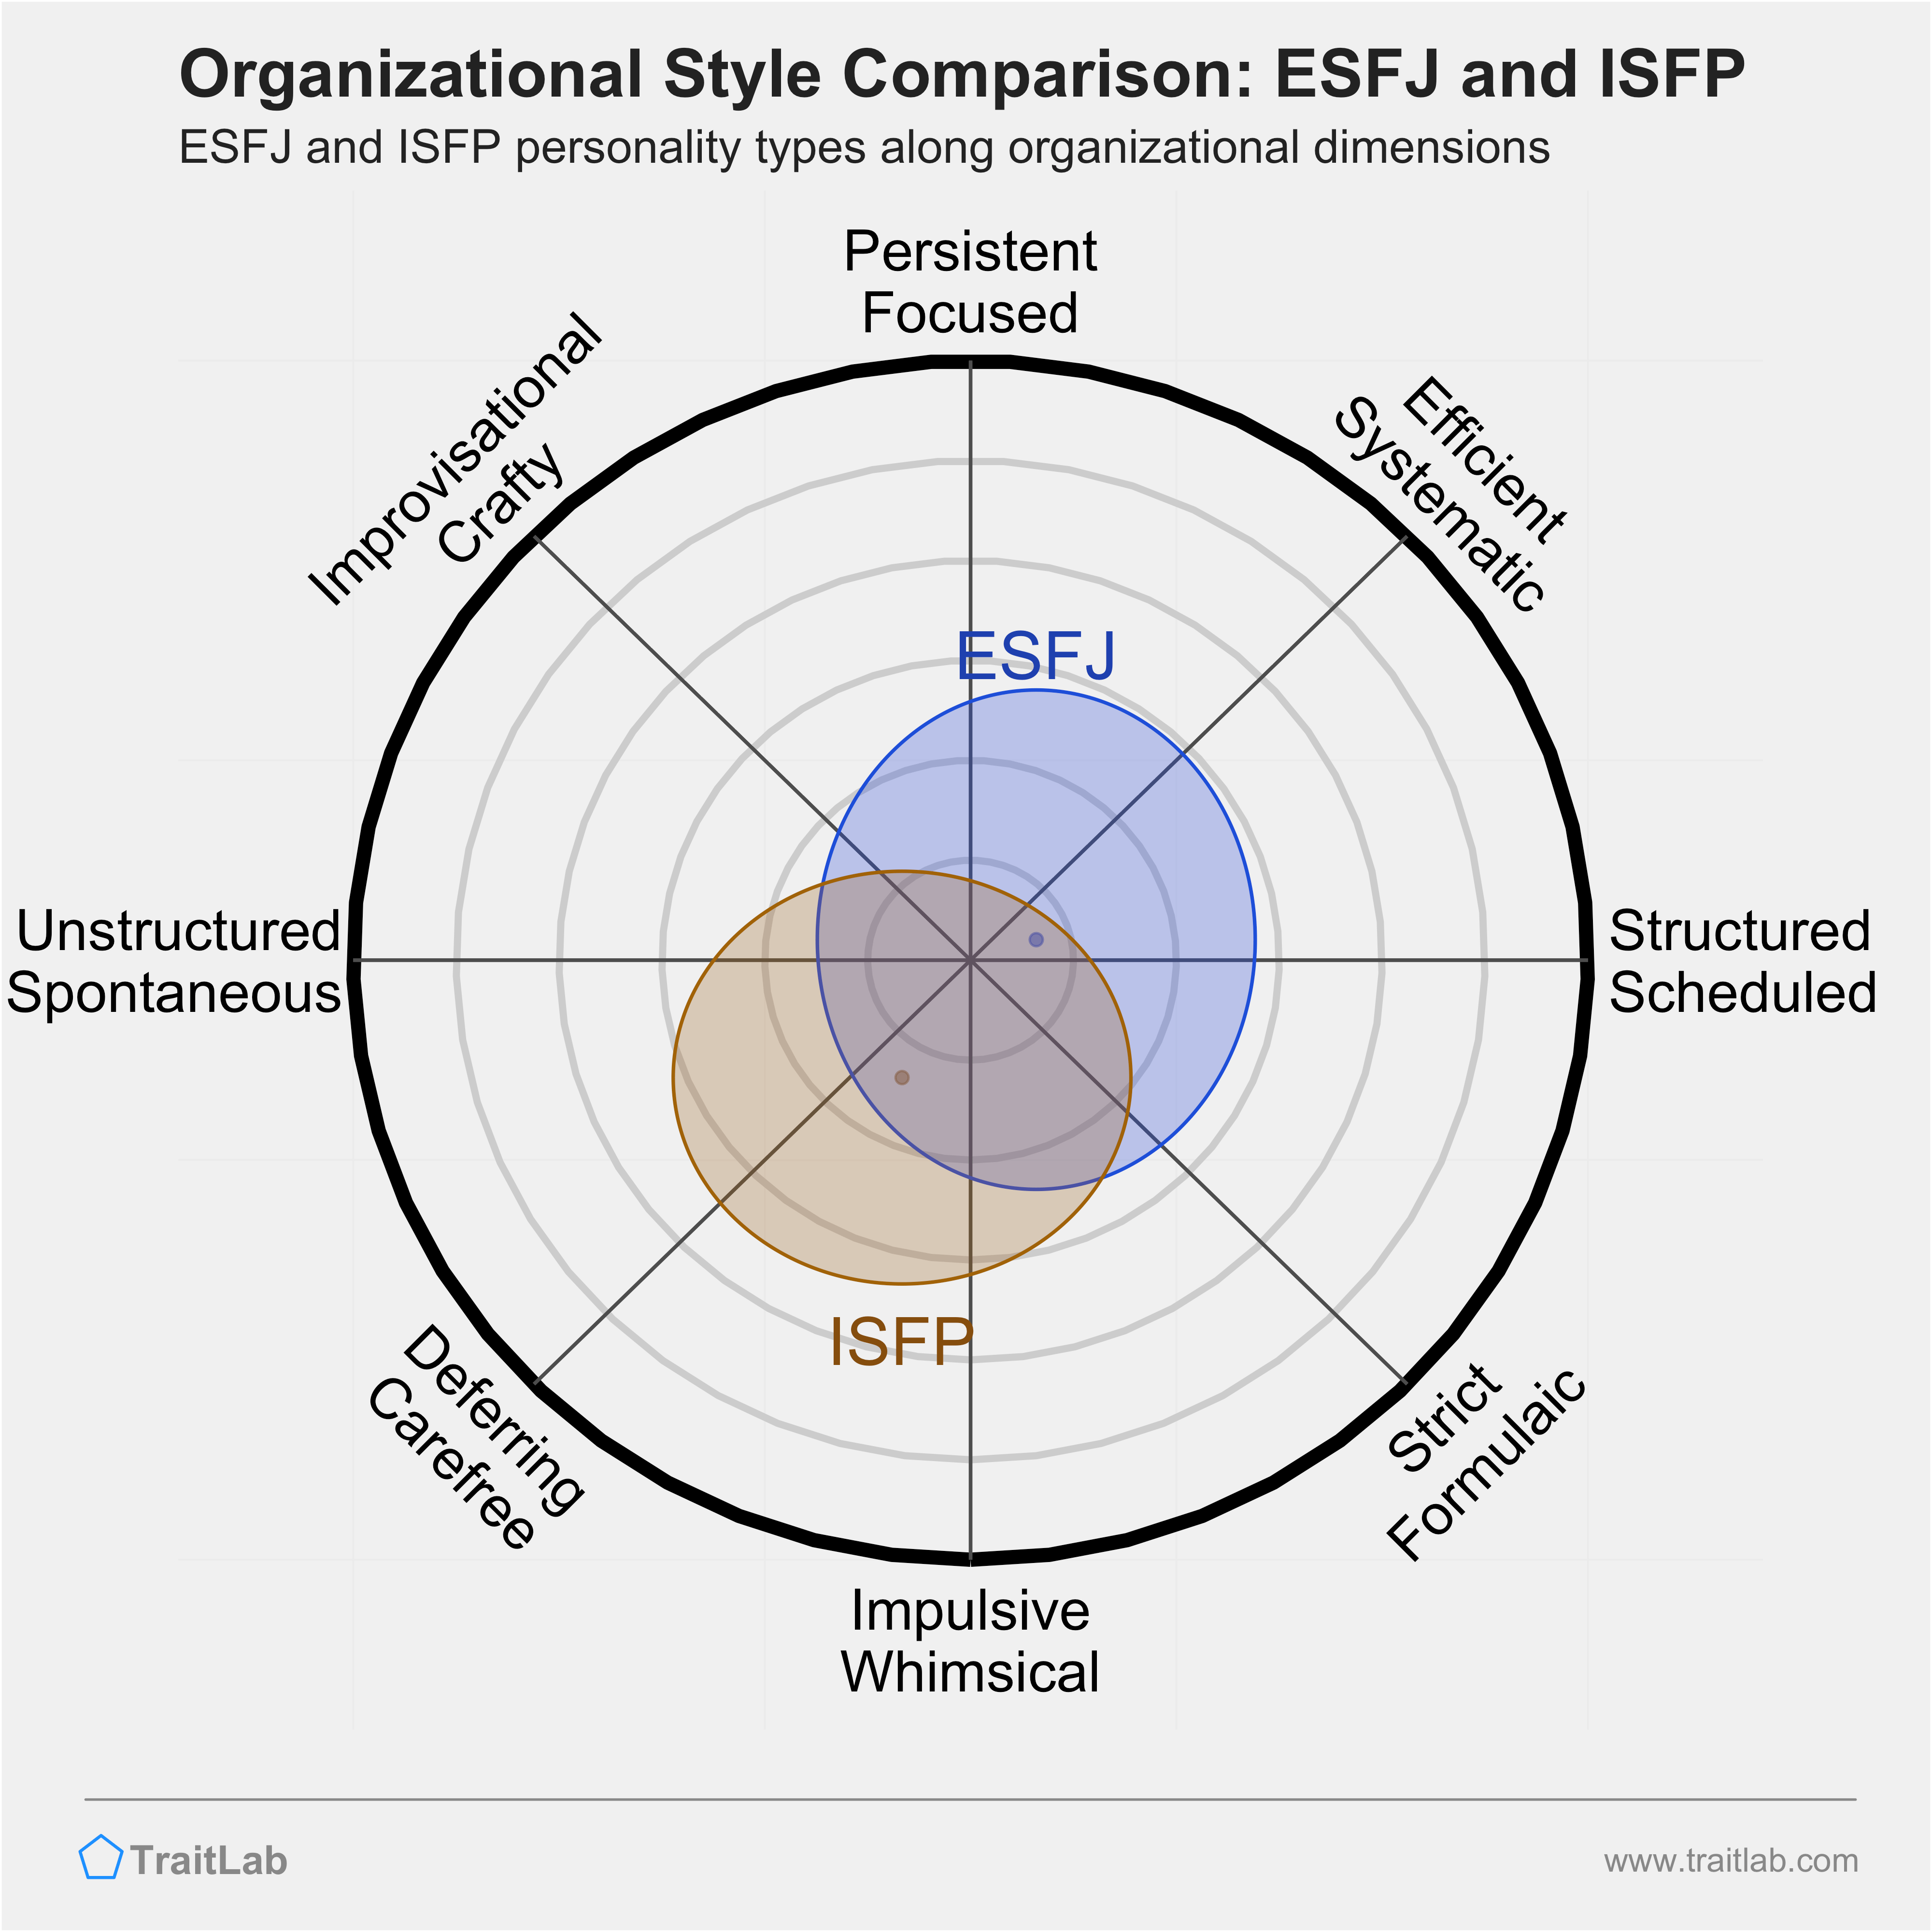 ESFJ and ISFP comparison across organizational dimensions